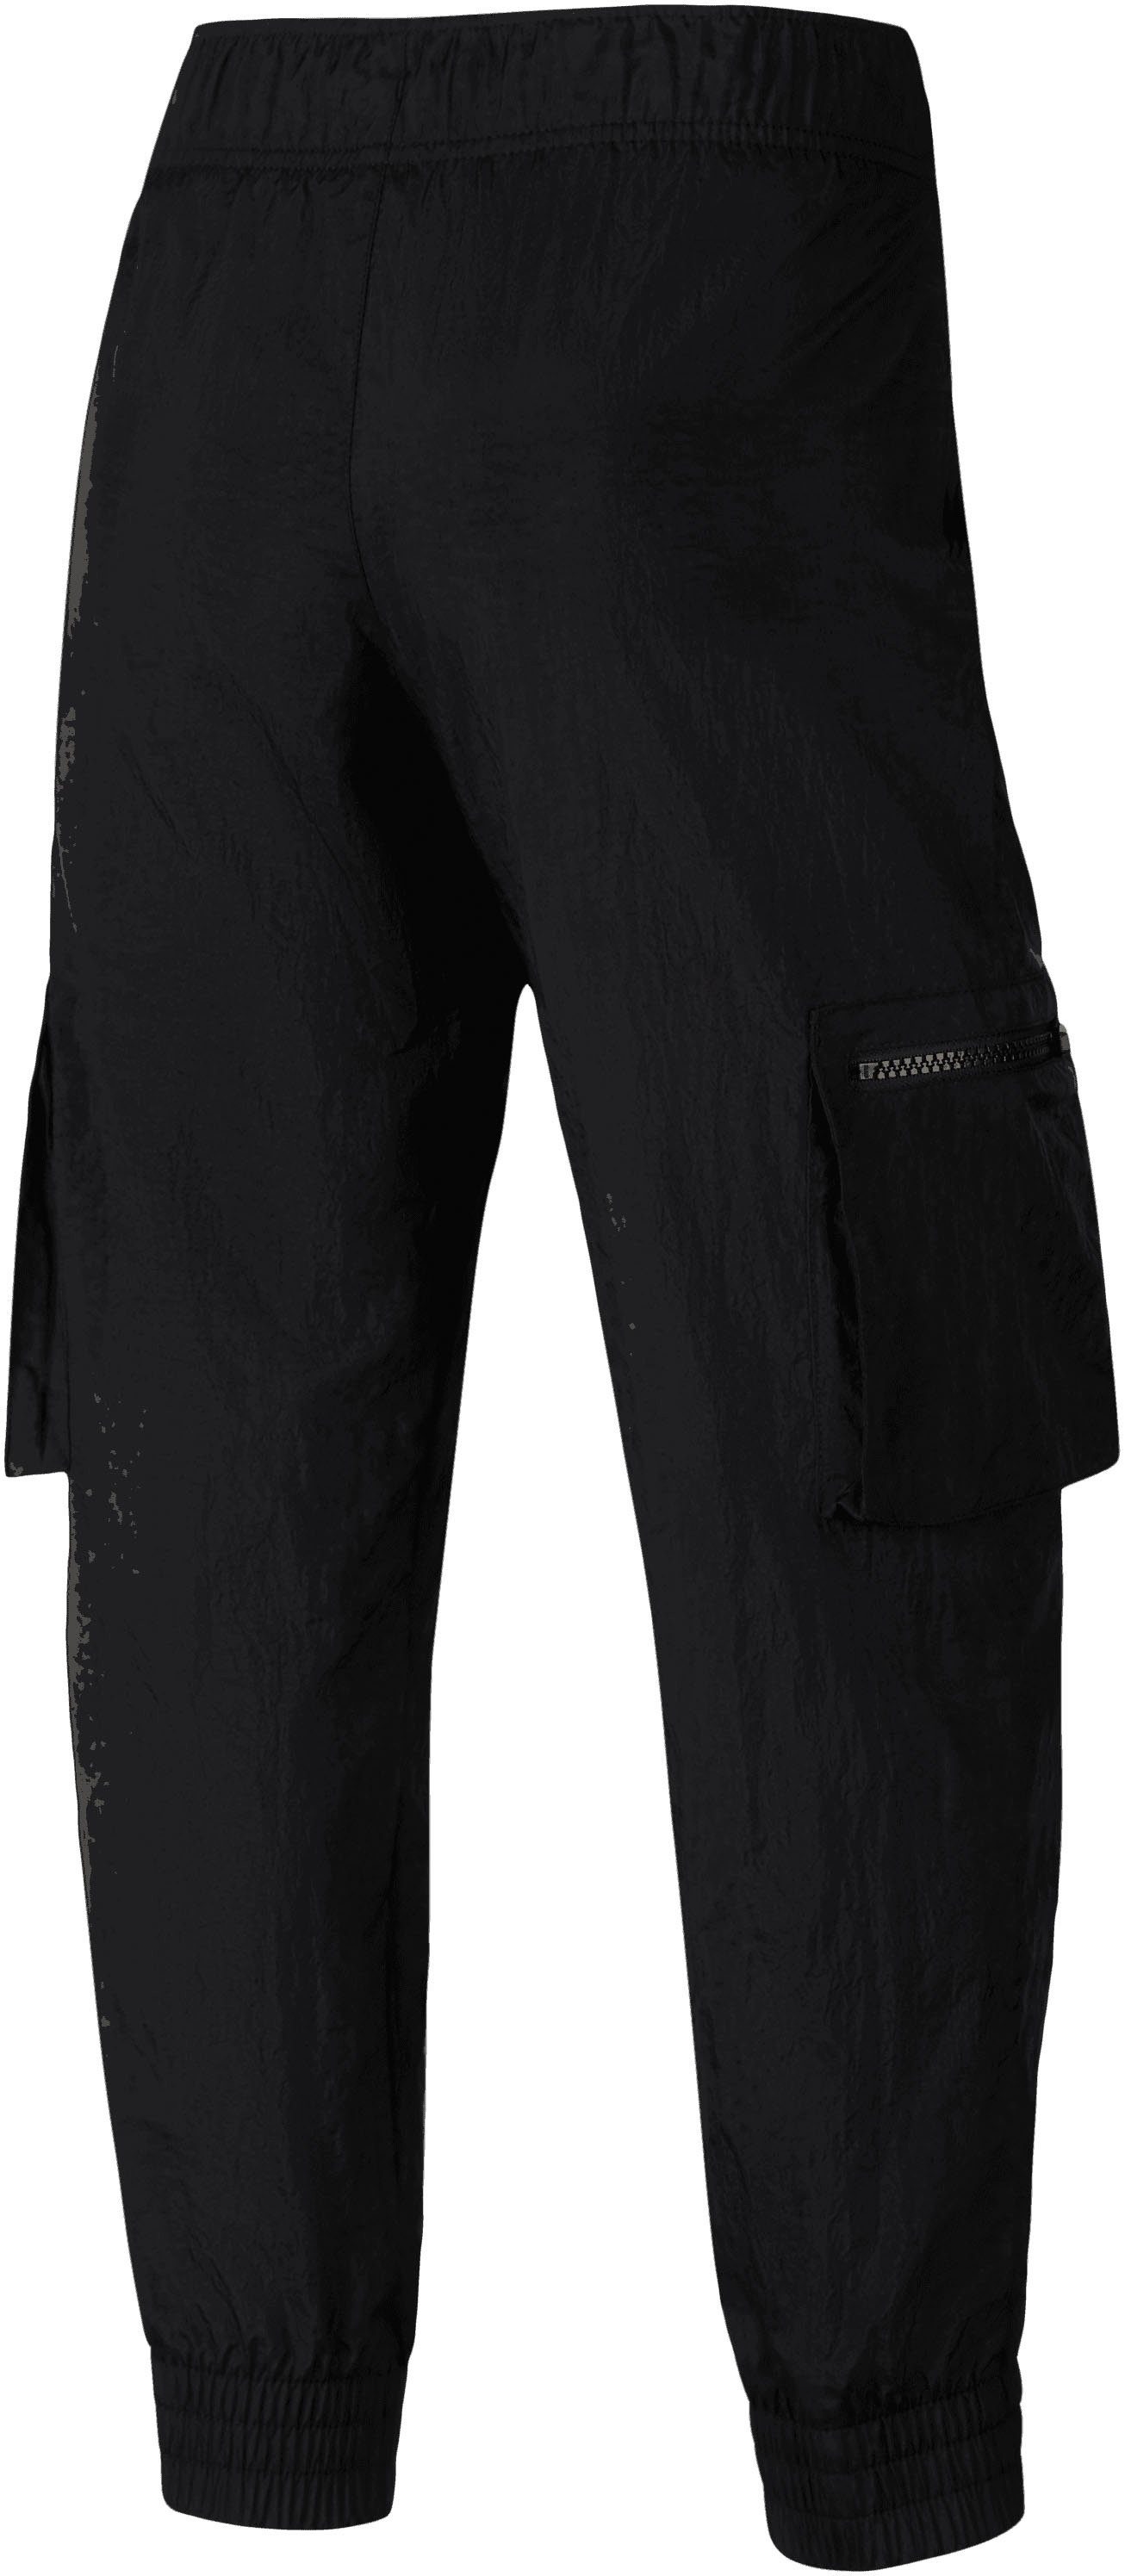 Nike Sportswear Sporthose Big Kids' Pants Woven BLACK/WHITE Cargo (Girls)